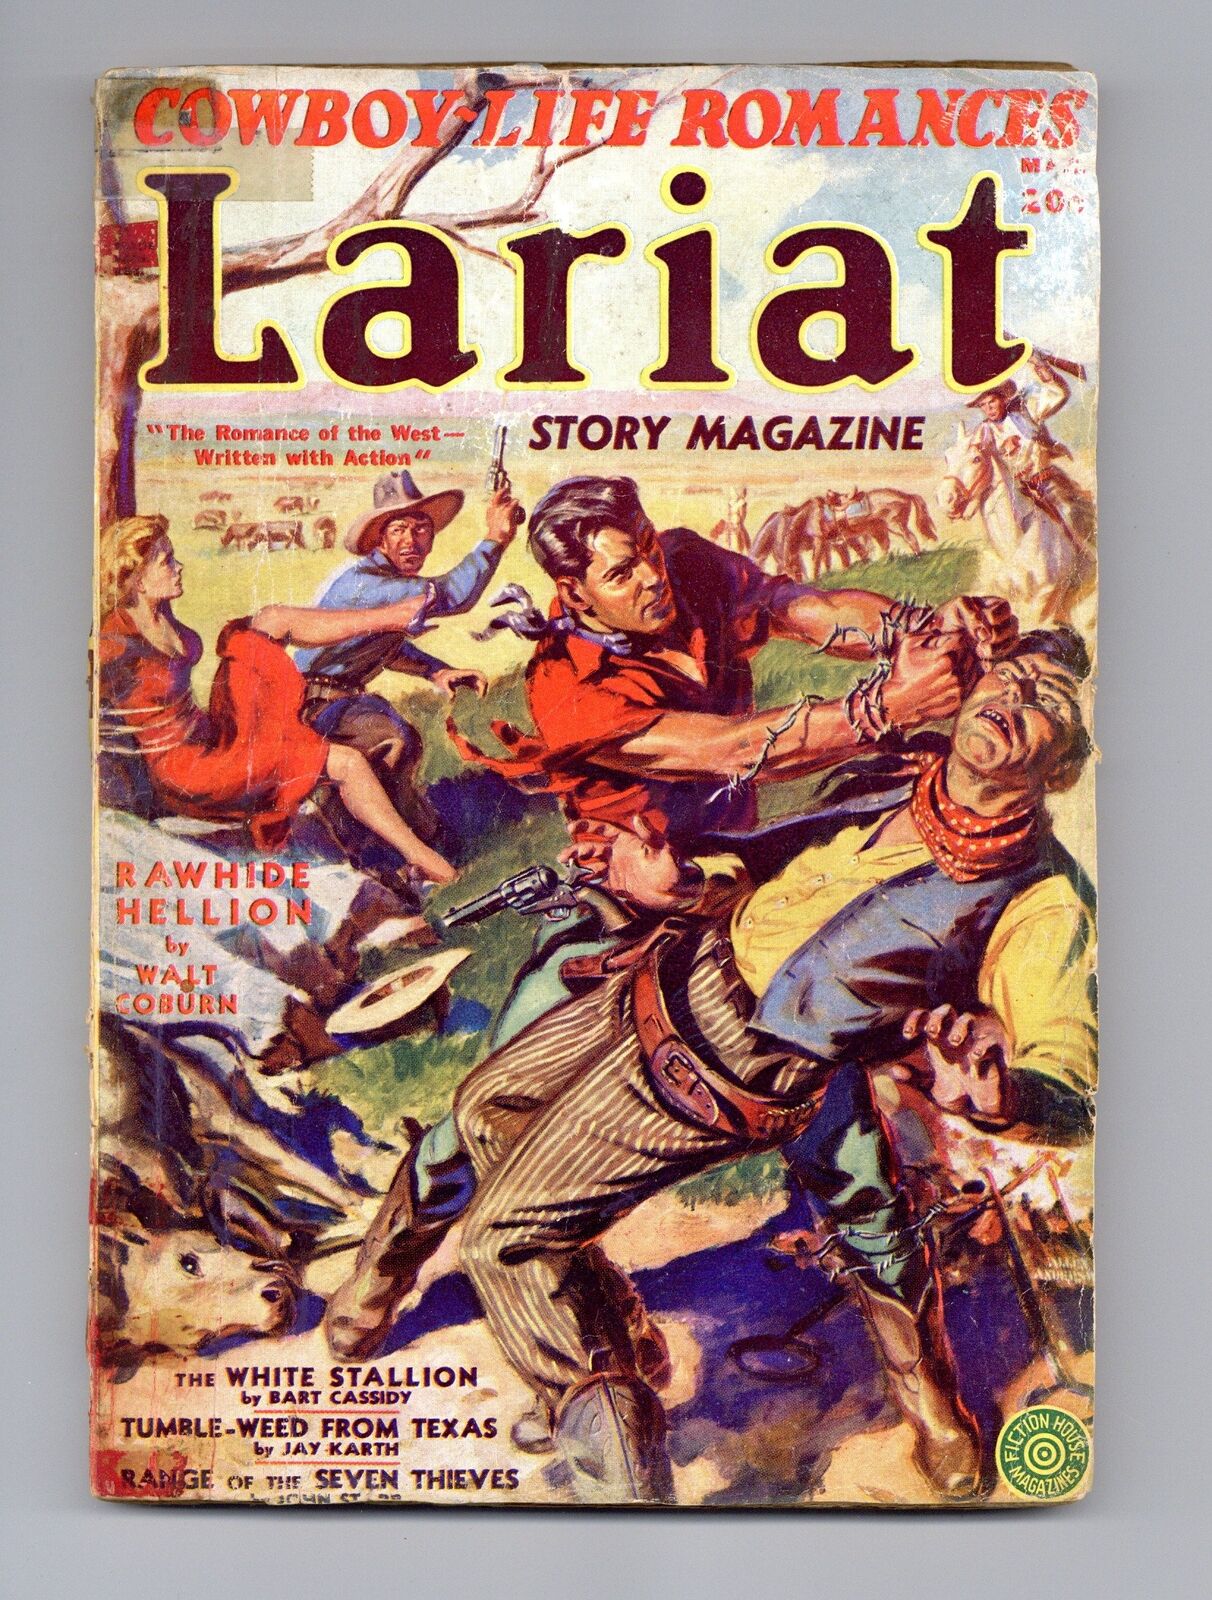 Lariat Story Magazine Pulp Mar 1941 Vol. 12 #6 FR/GD 1.5